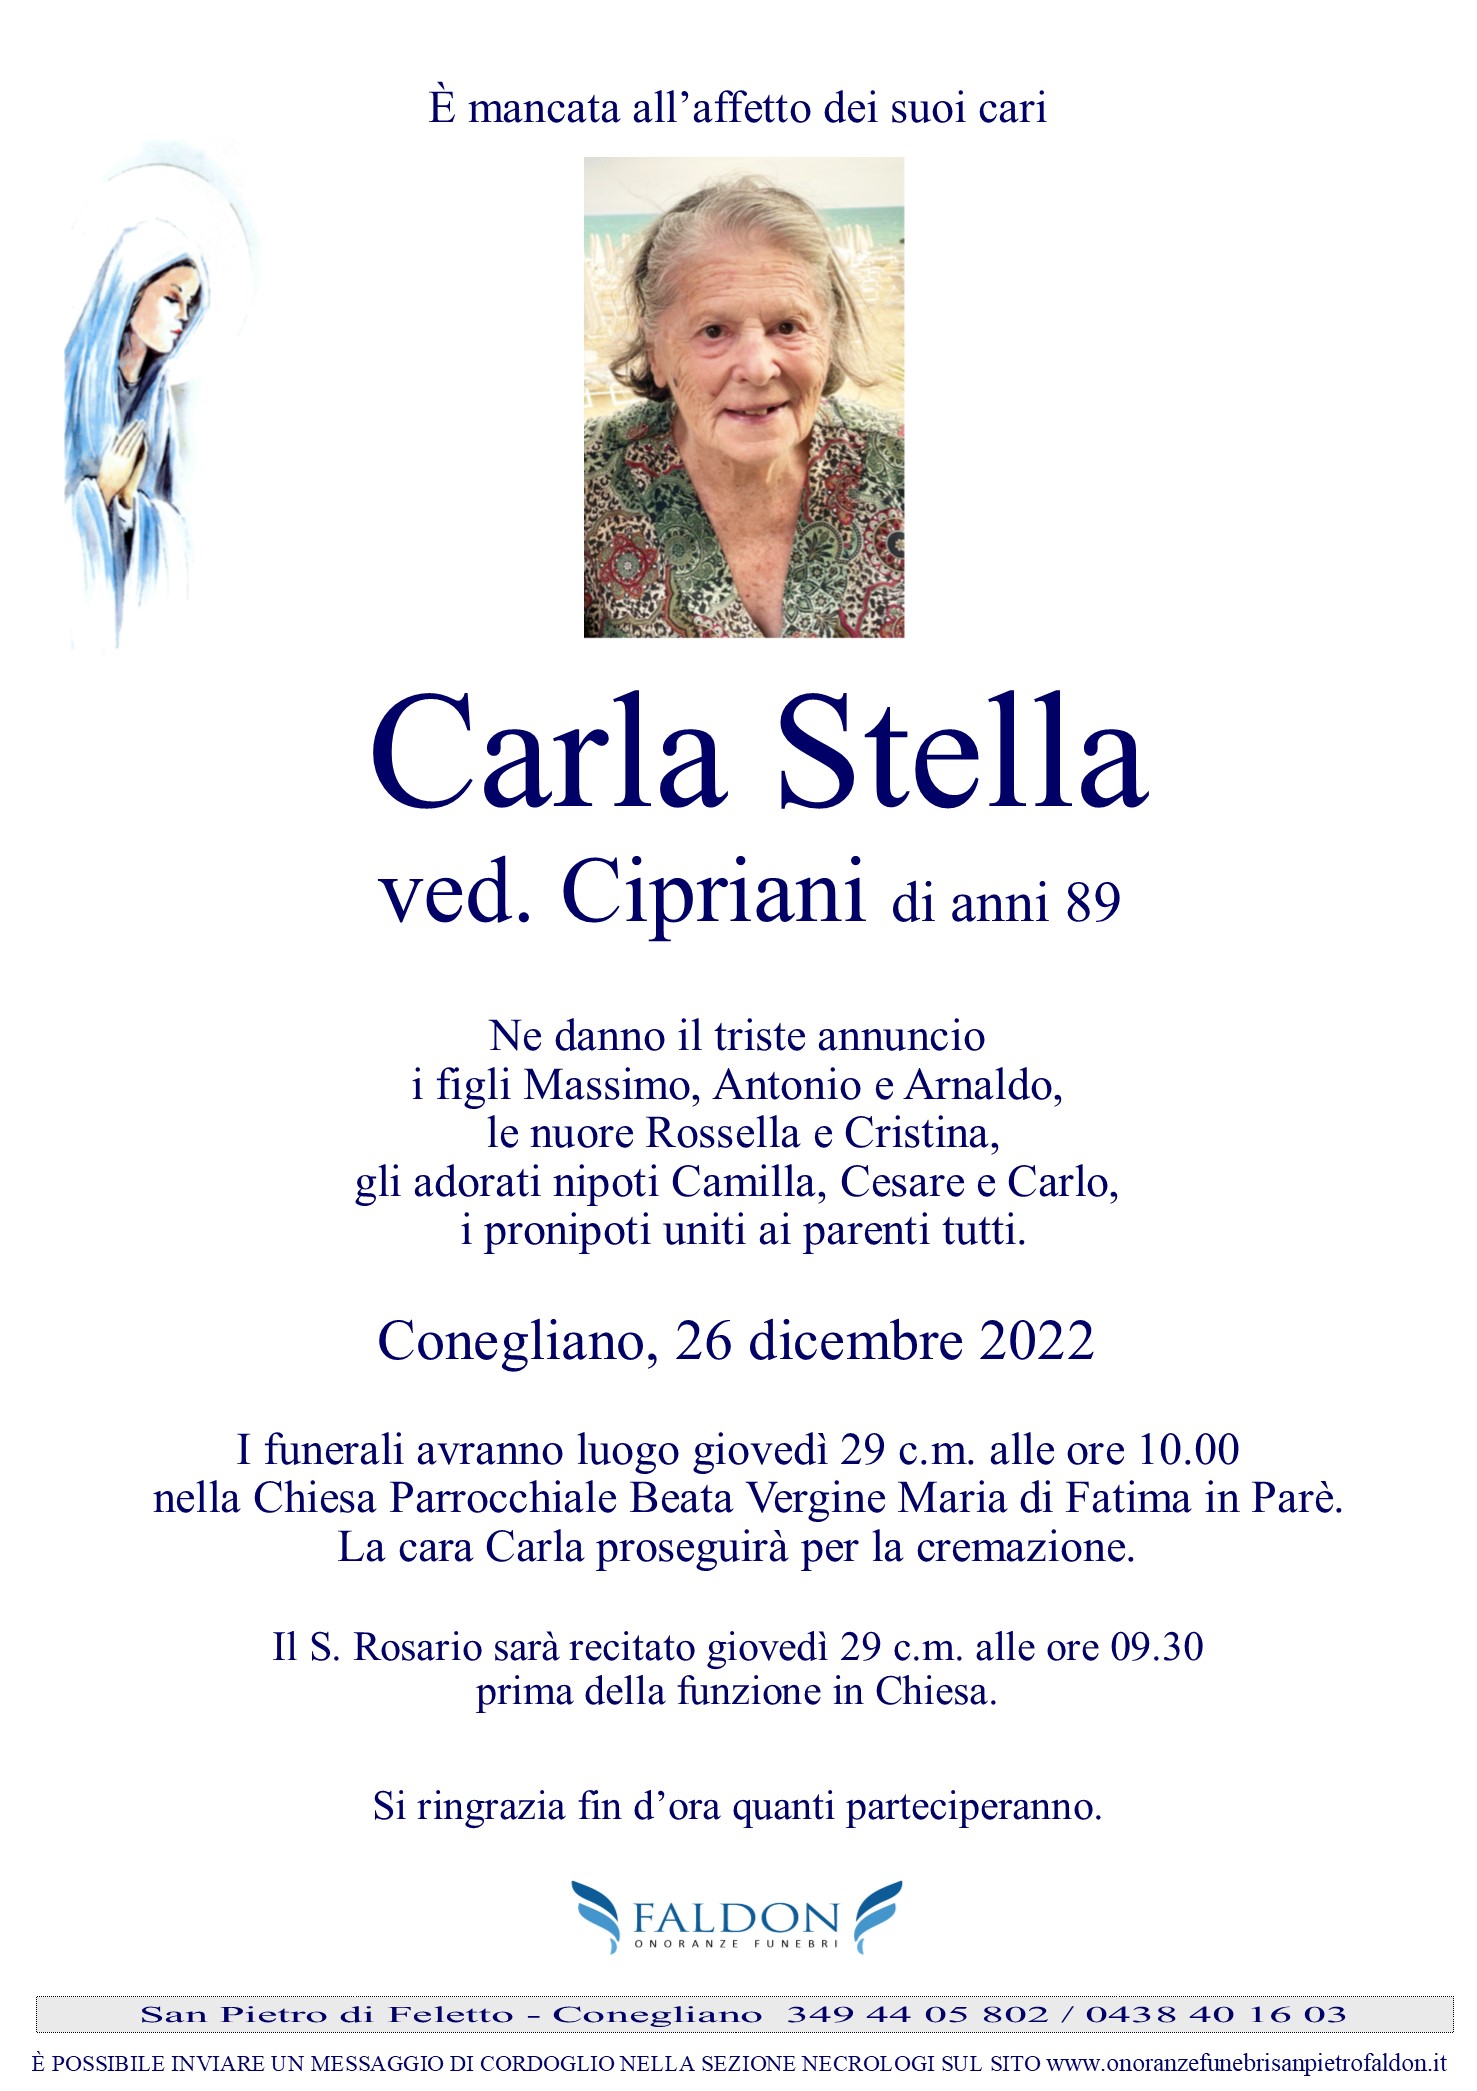 Carla Stella